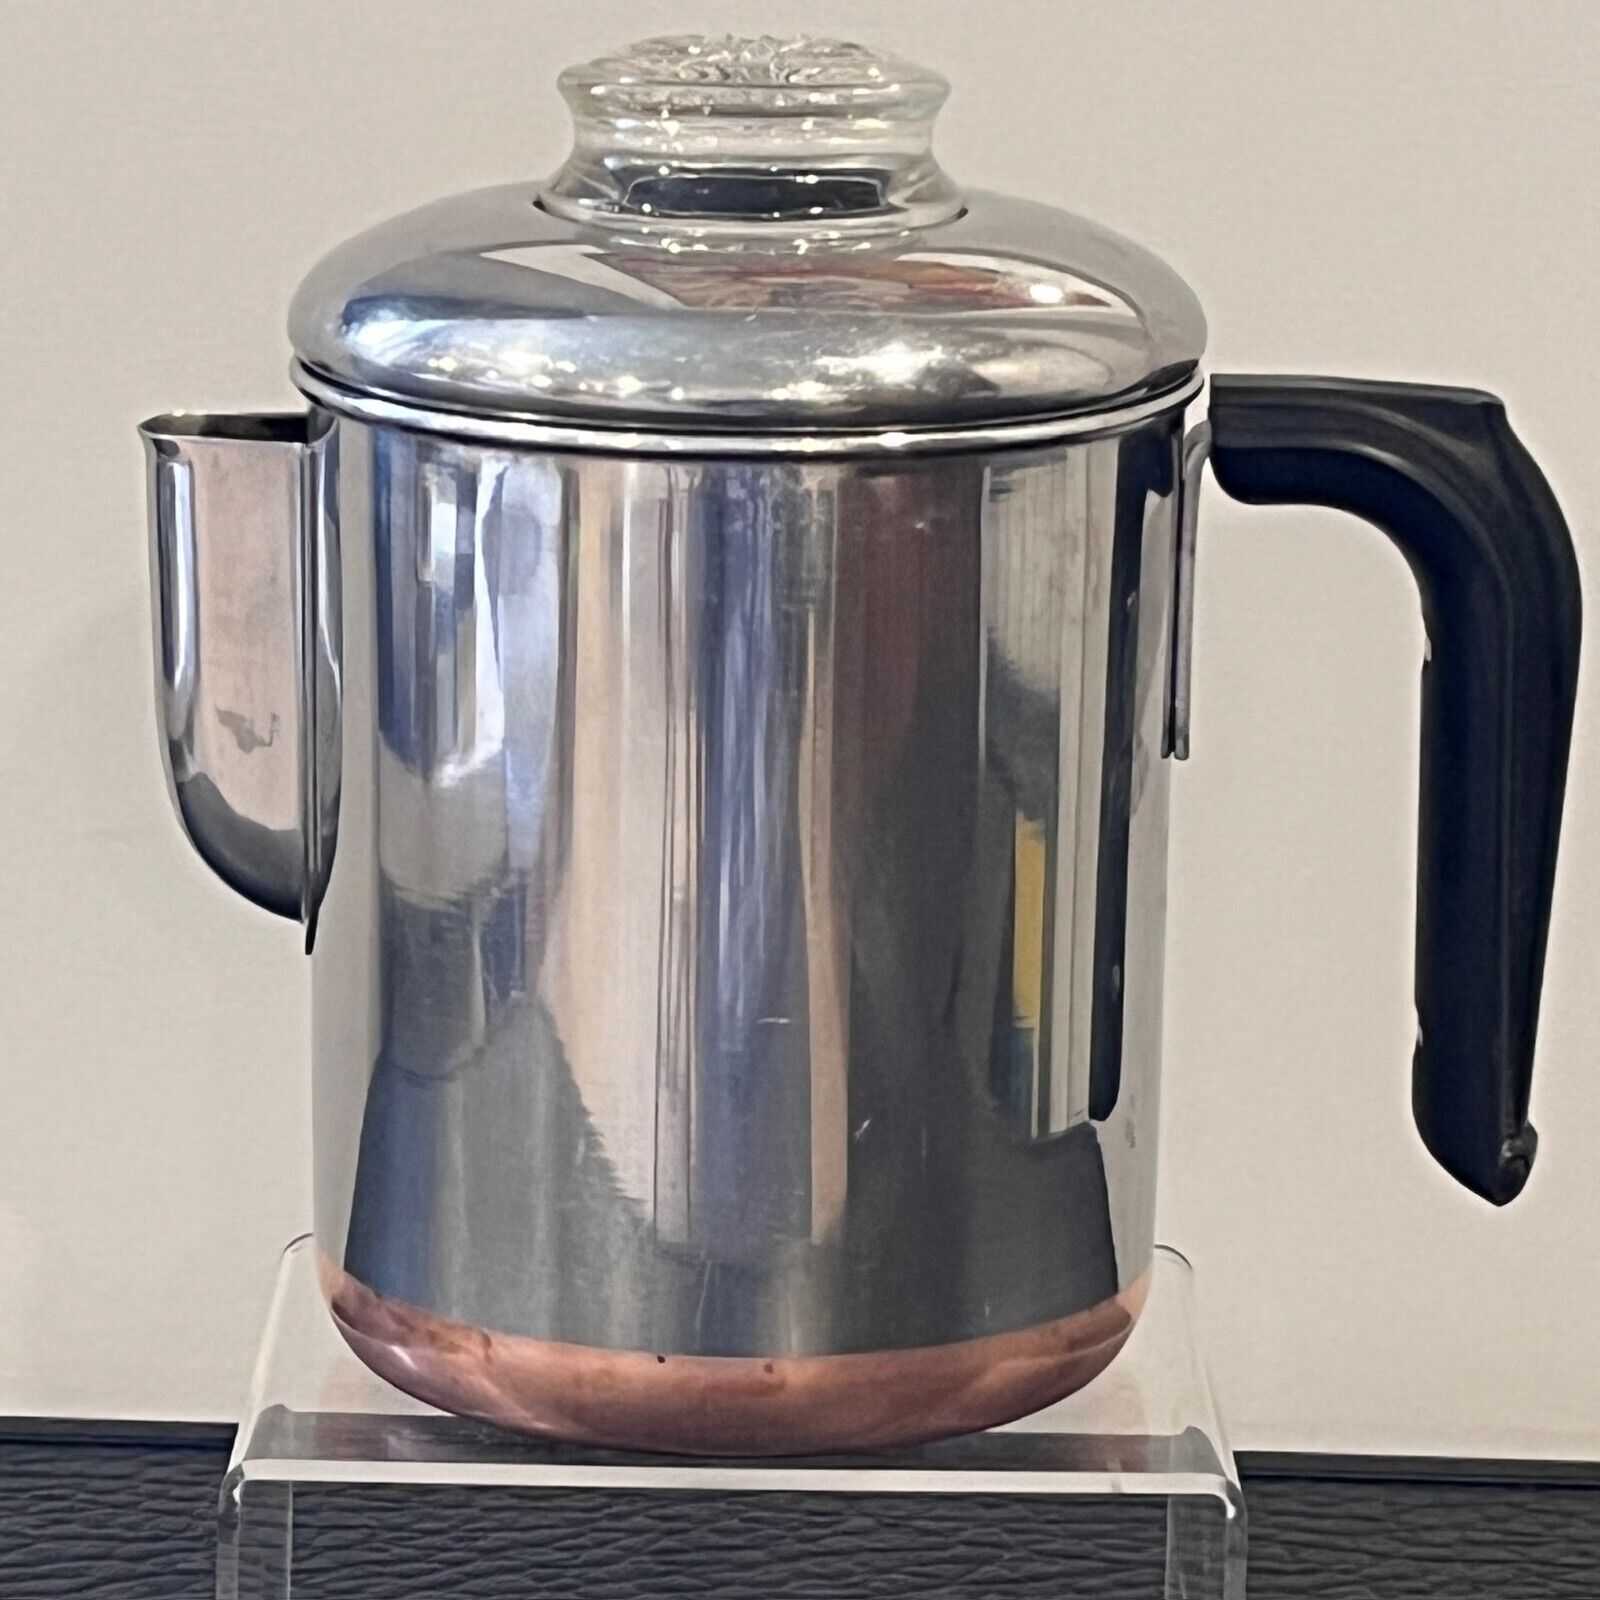 VTG Revere Ware Percolator Coffee Pot 1801 Copper Clad Stainless. Complete.